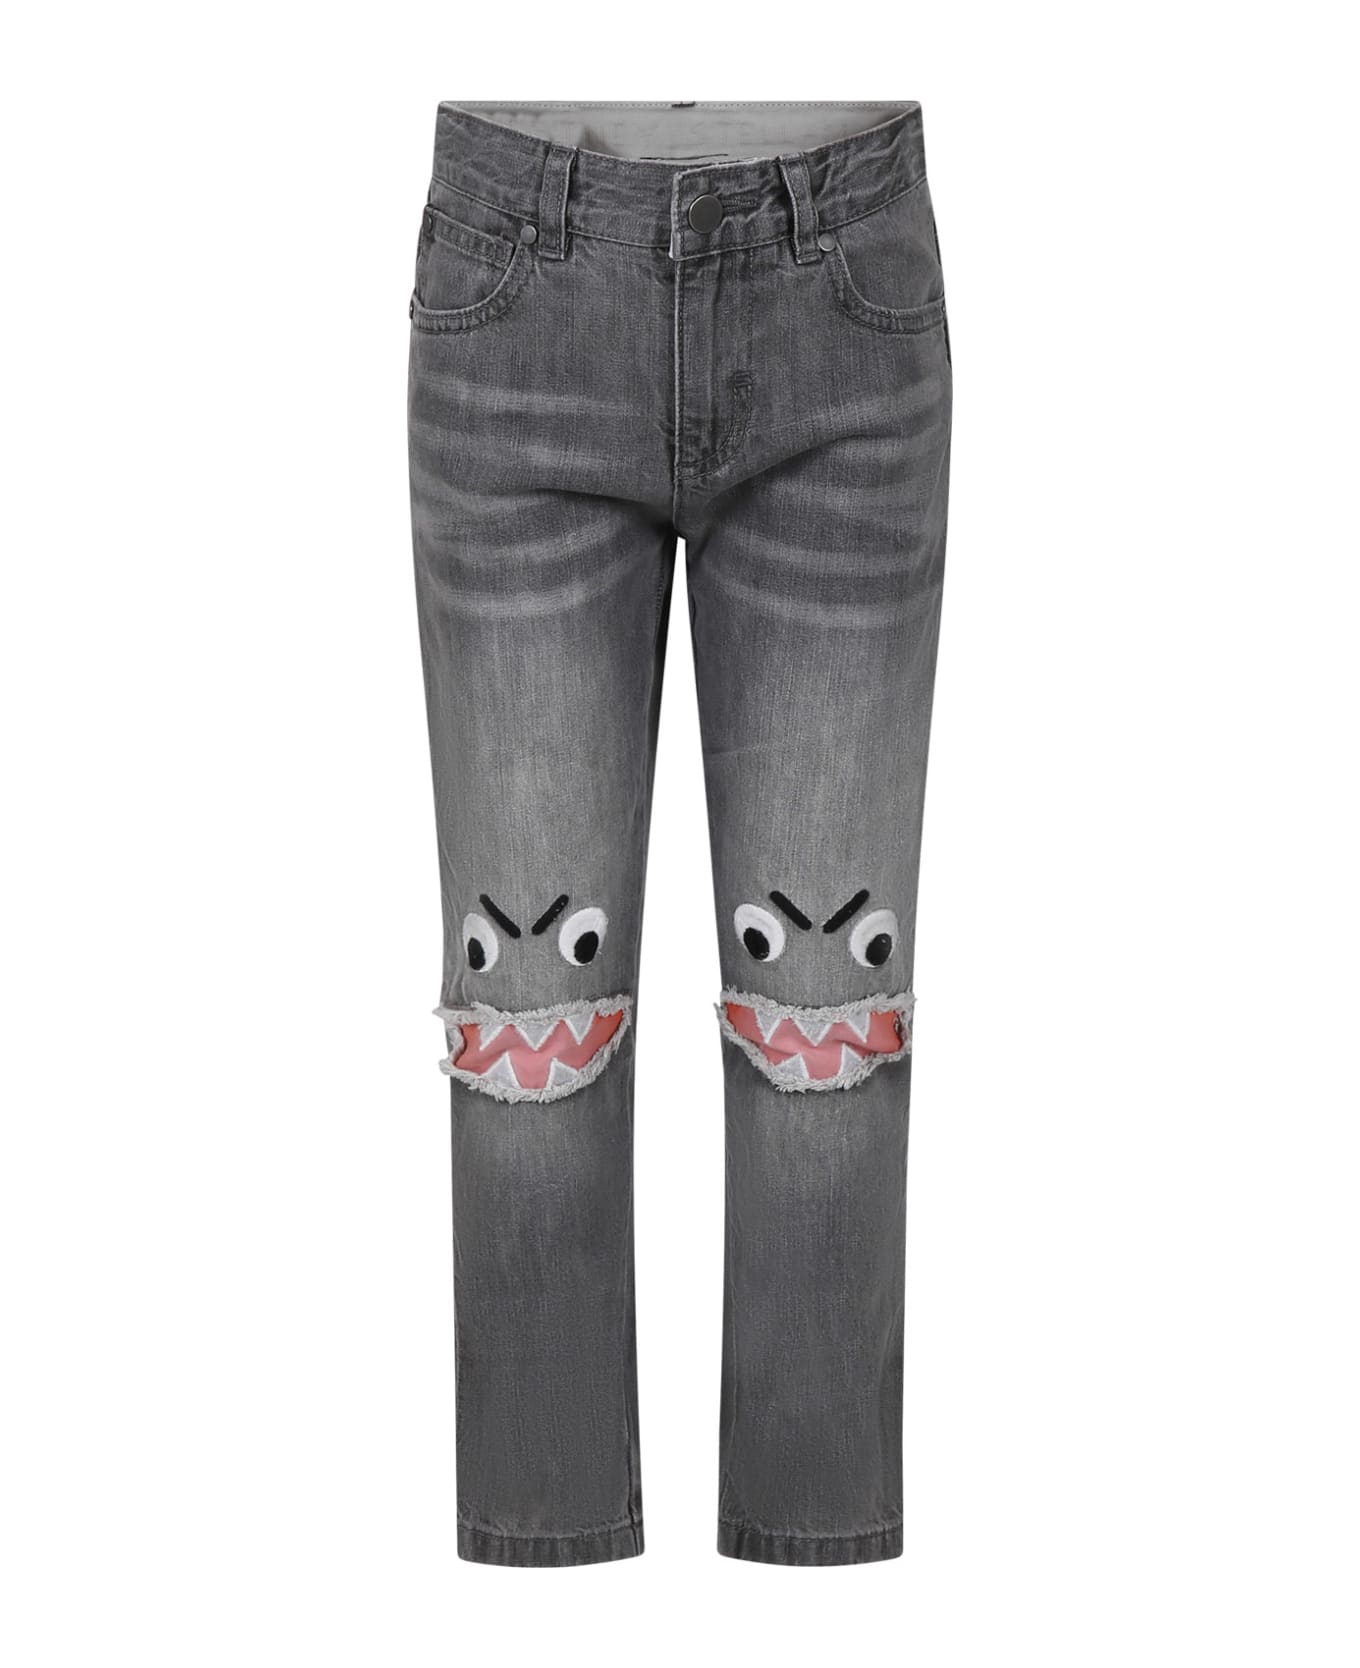 Stella McCartney Kids Grey Jeans For Boy With Shark - Grey